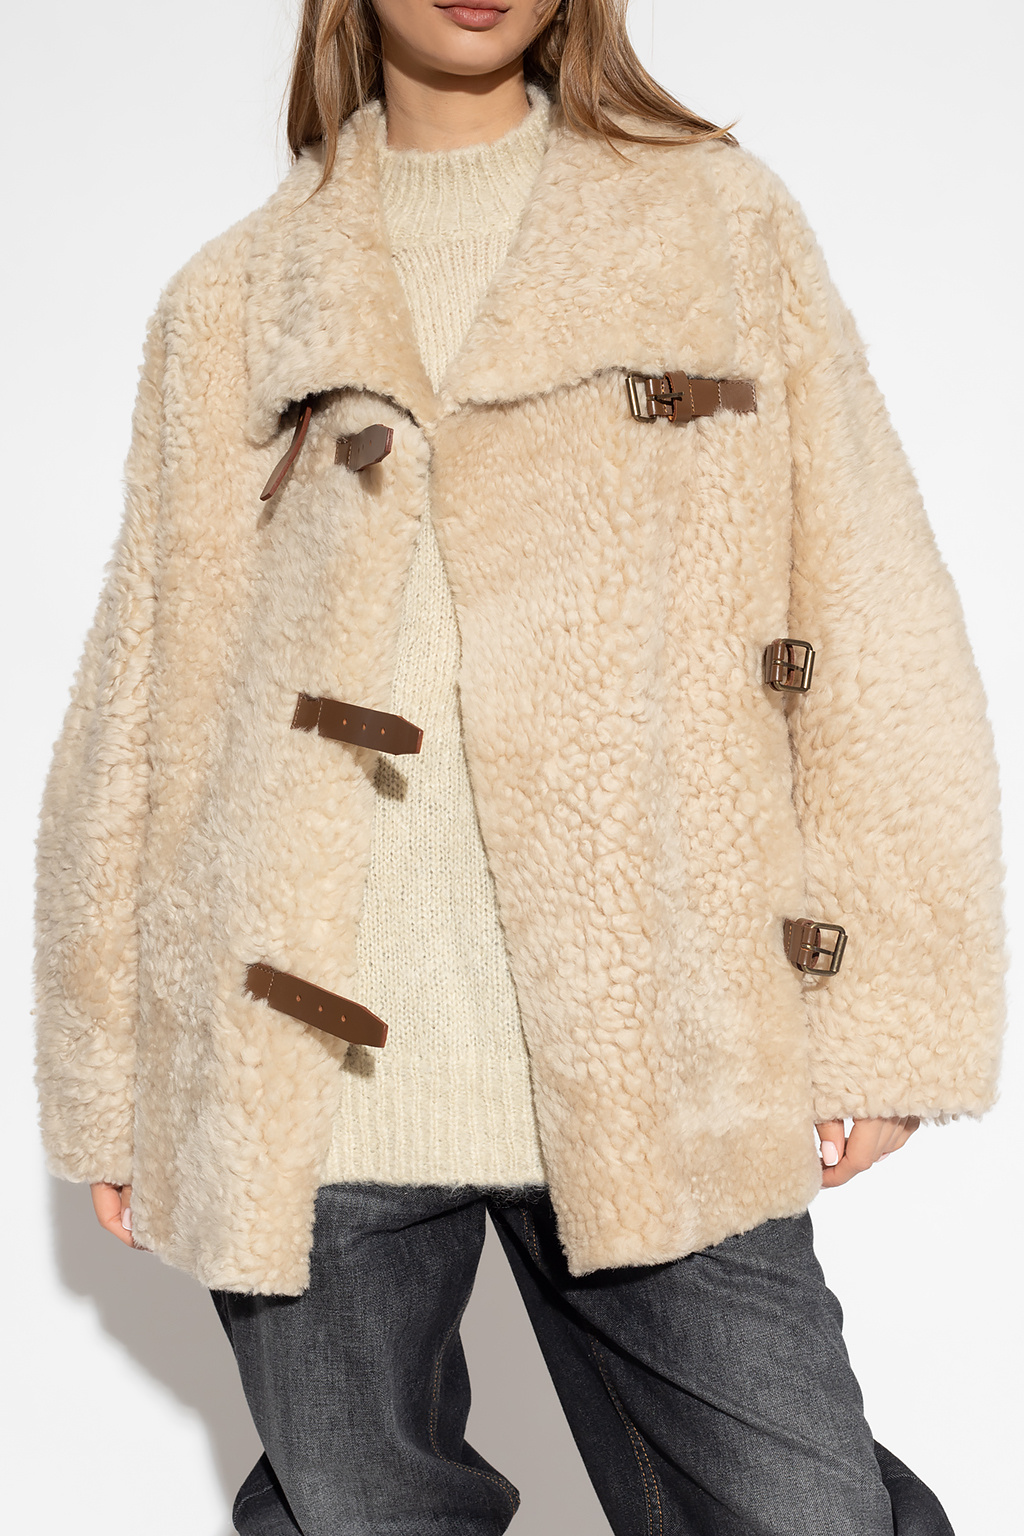 Isabel Marant ‘Bealila’ shearling coat